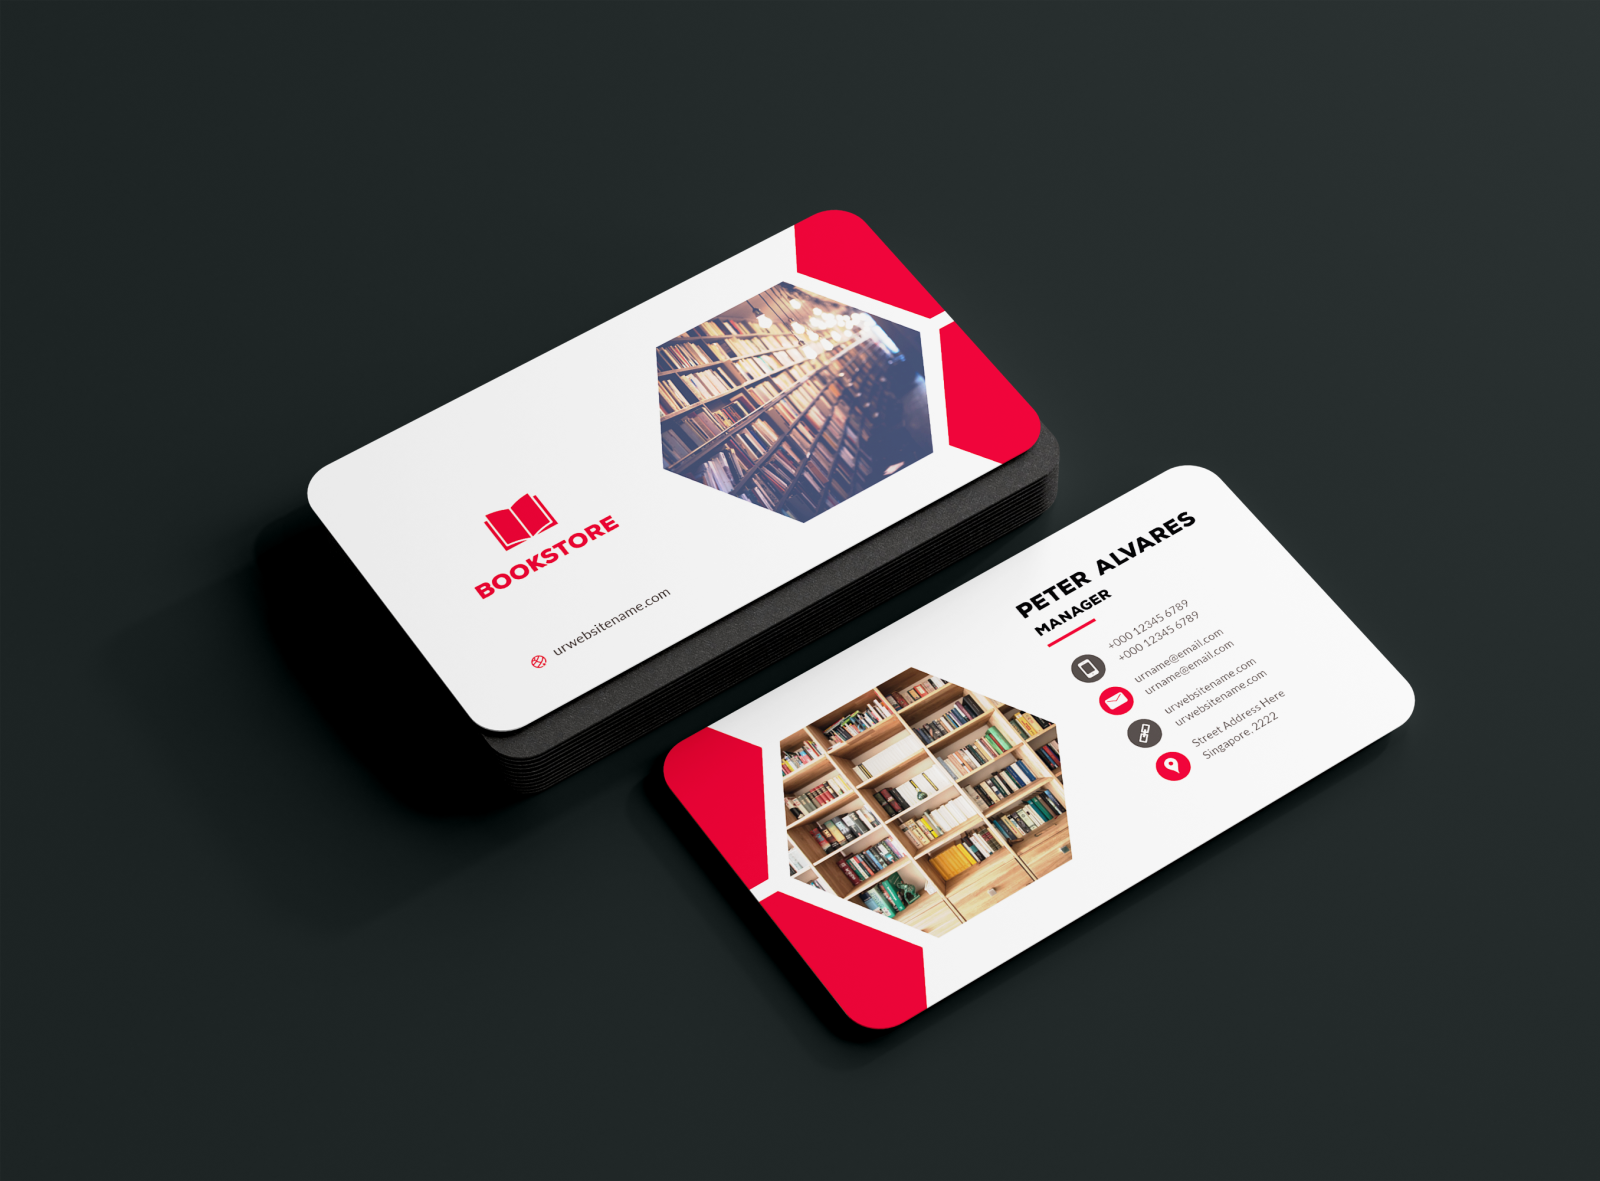 bookstore-business-card-design-by-riyadh-charredib-on-dribbble